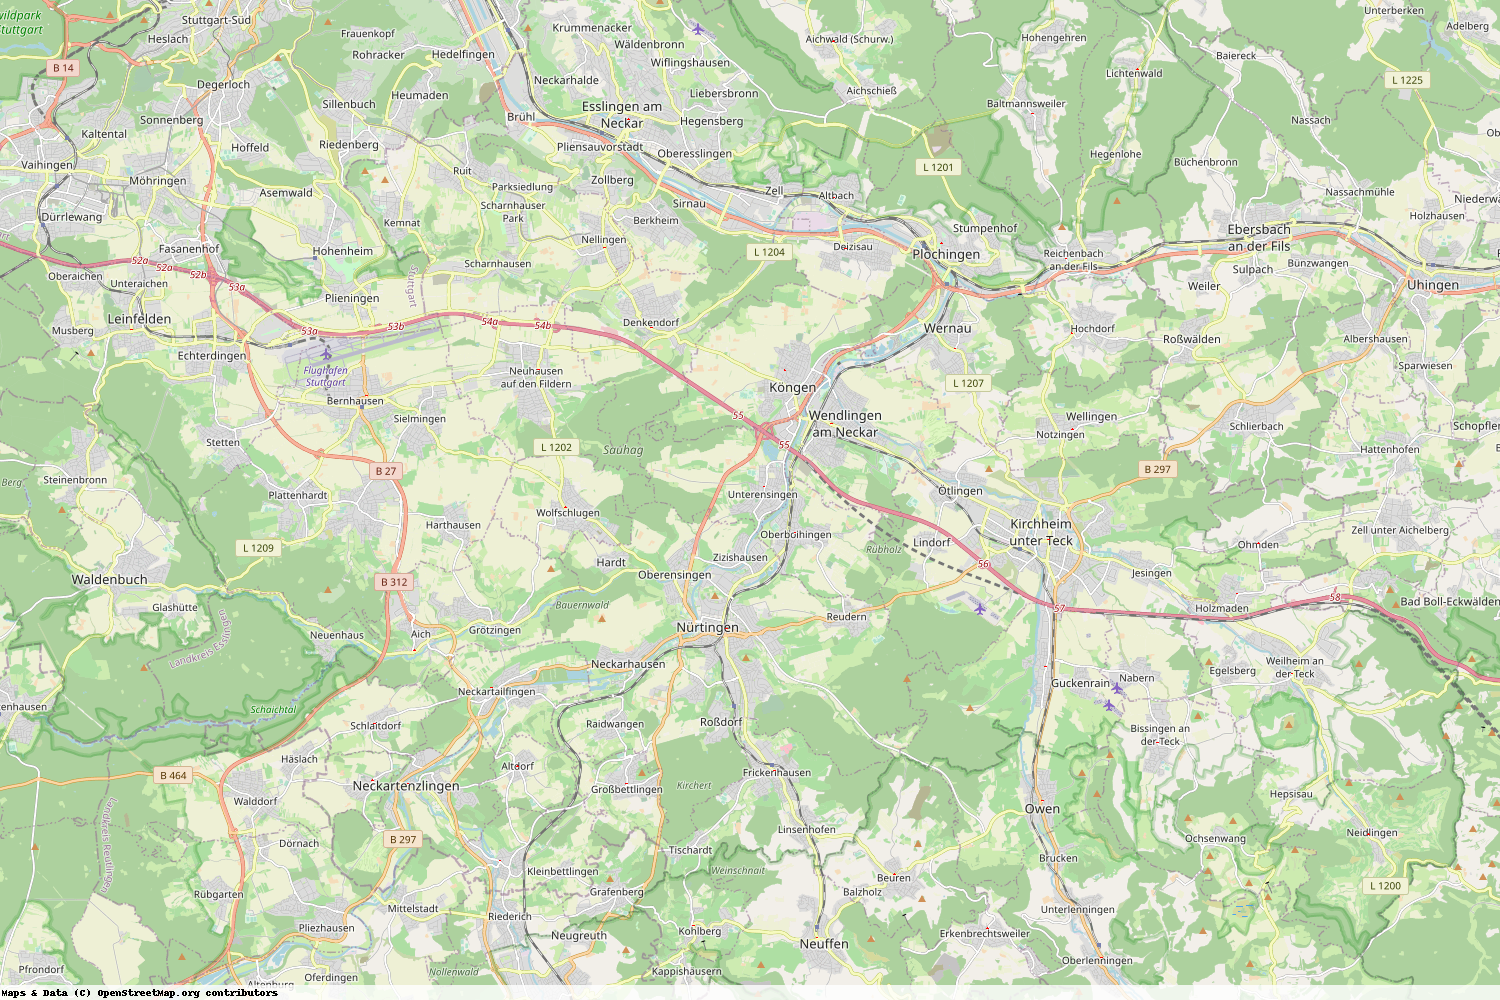 Ist gerade Stromausfall in Baden-Württemberg - Esslingen?